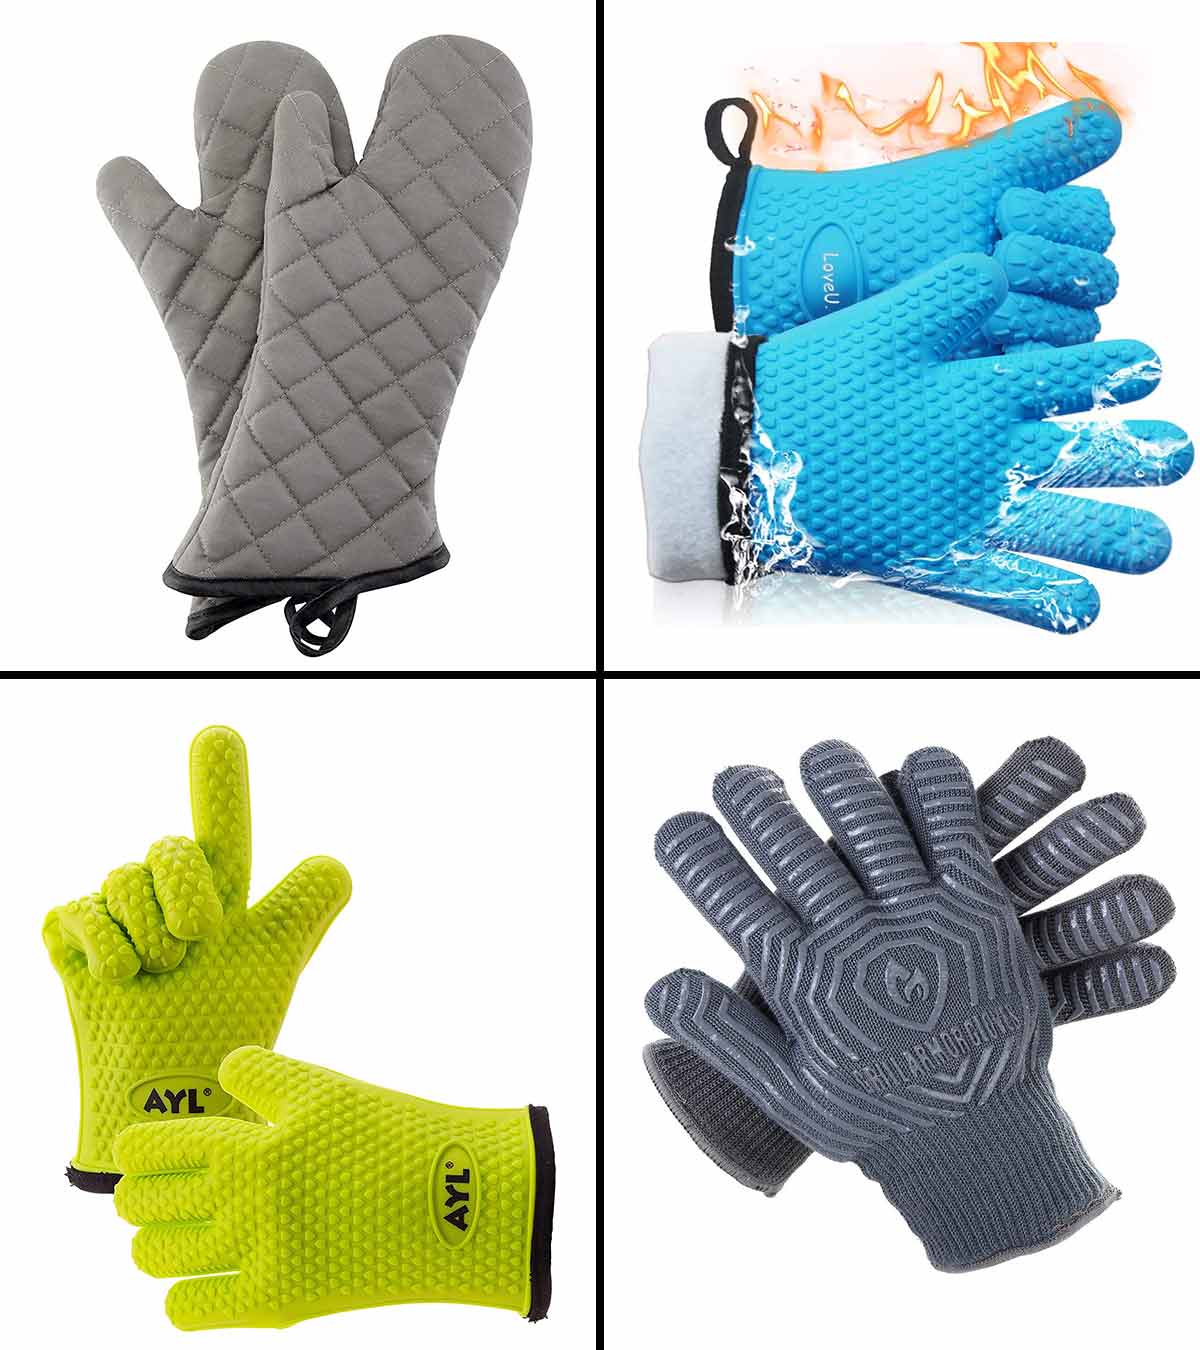 https://www.momjunction.com/wp-content/uploads/2020/08/11-Best-Oven-Gloves-To-Buy-In-2020.jpg